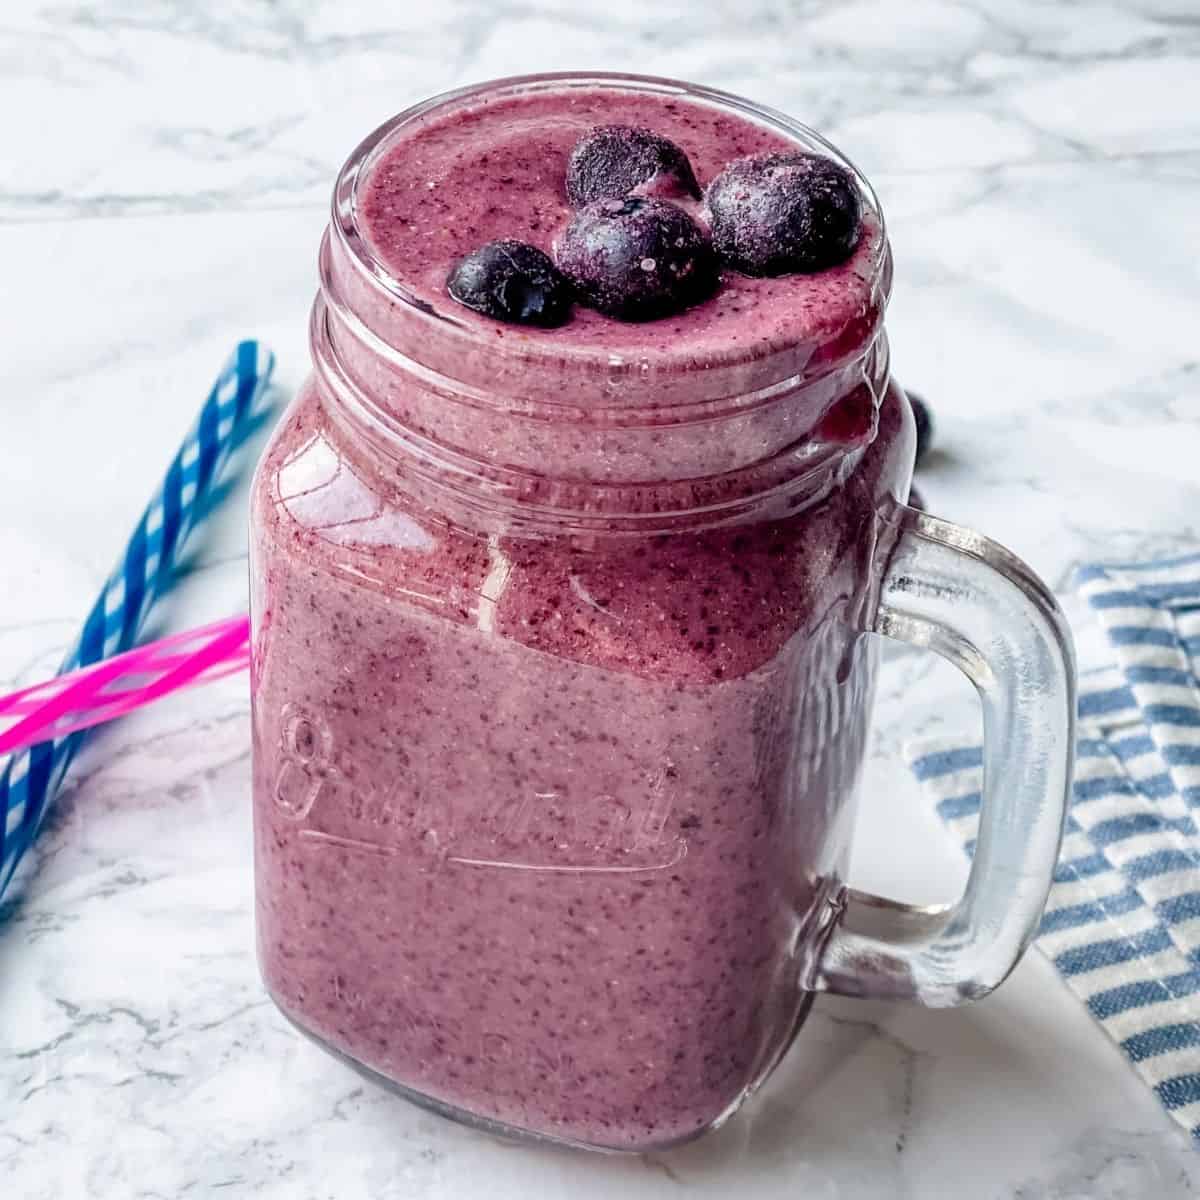 Blueberry Smoothie recipe - The Recipe Rebel